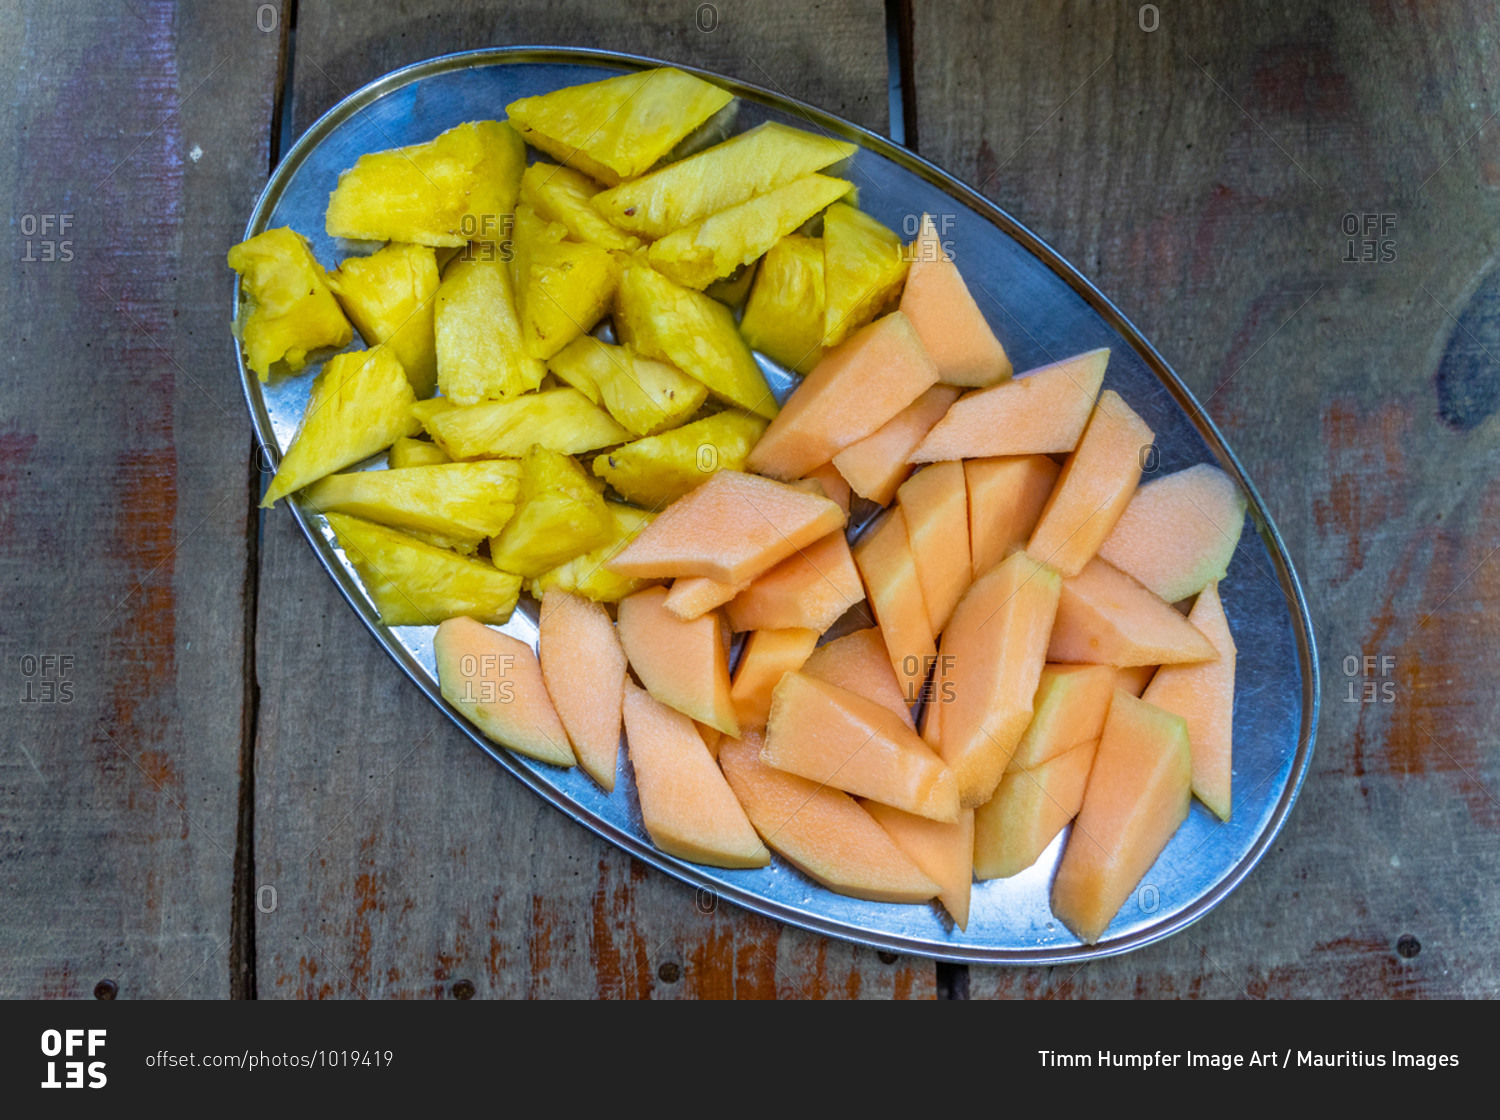 America, Caribbean, Greater Antilles, Dominican Republic, Jarabacoa, Los Calabazos, Sonido del Yaque Eco Lodge, fruit plate with fresh pineapple and melon